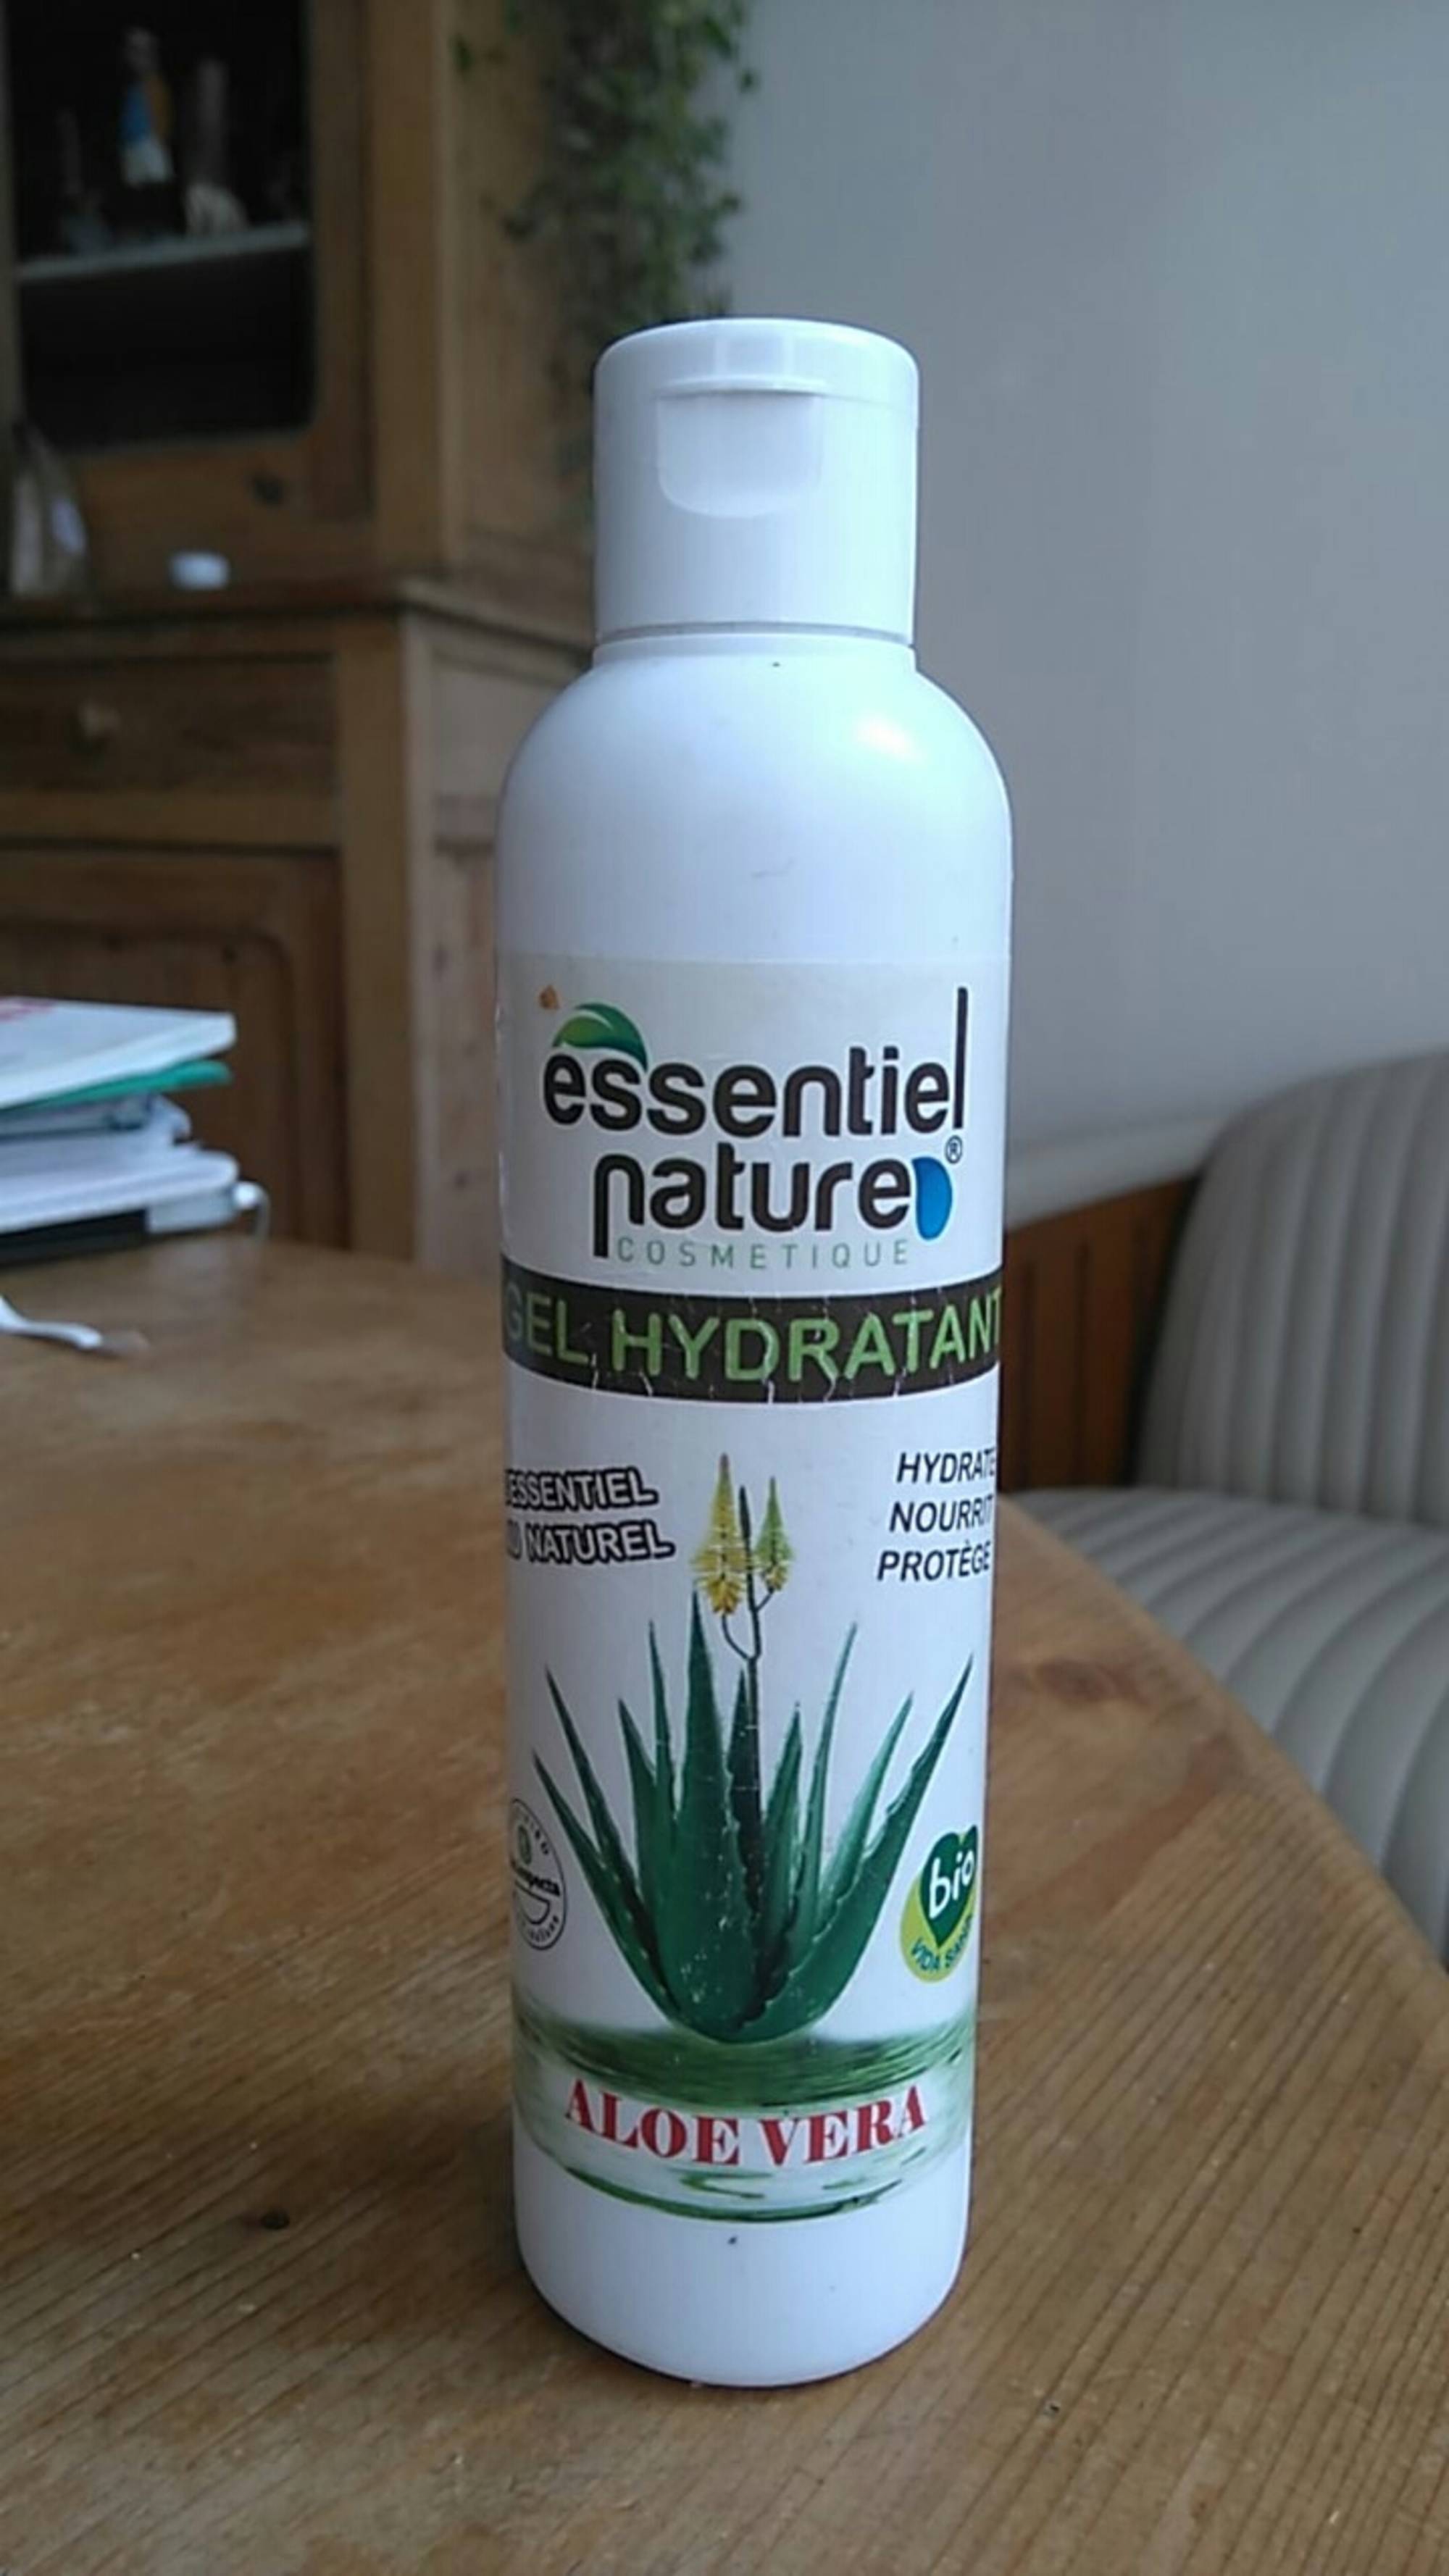 ESSENTIEL NATURE - Aloe vera - Gel hydratant